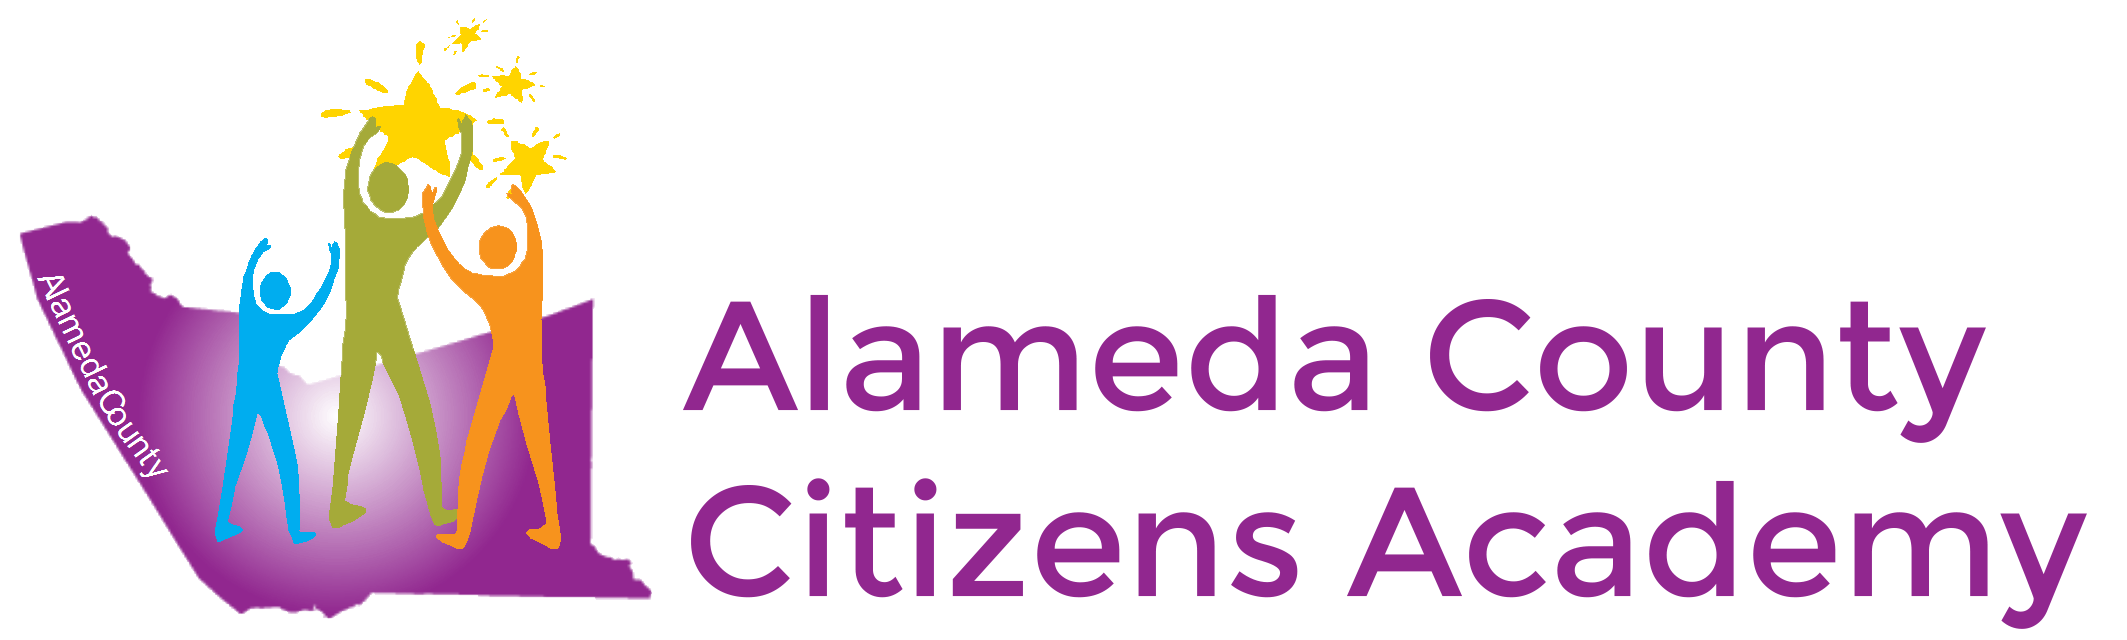 Alameda County Citizen's Academy